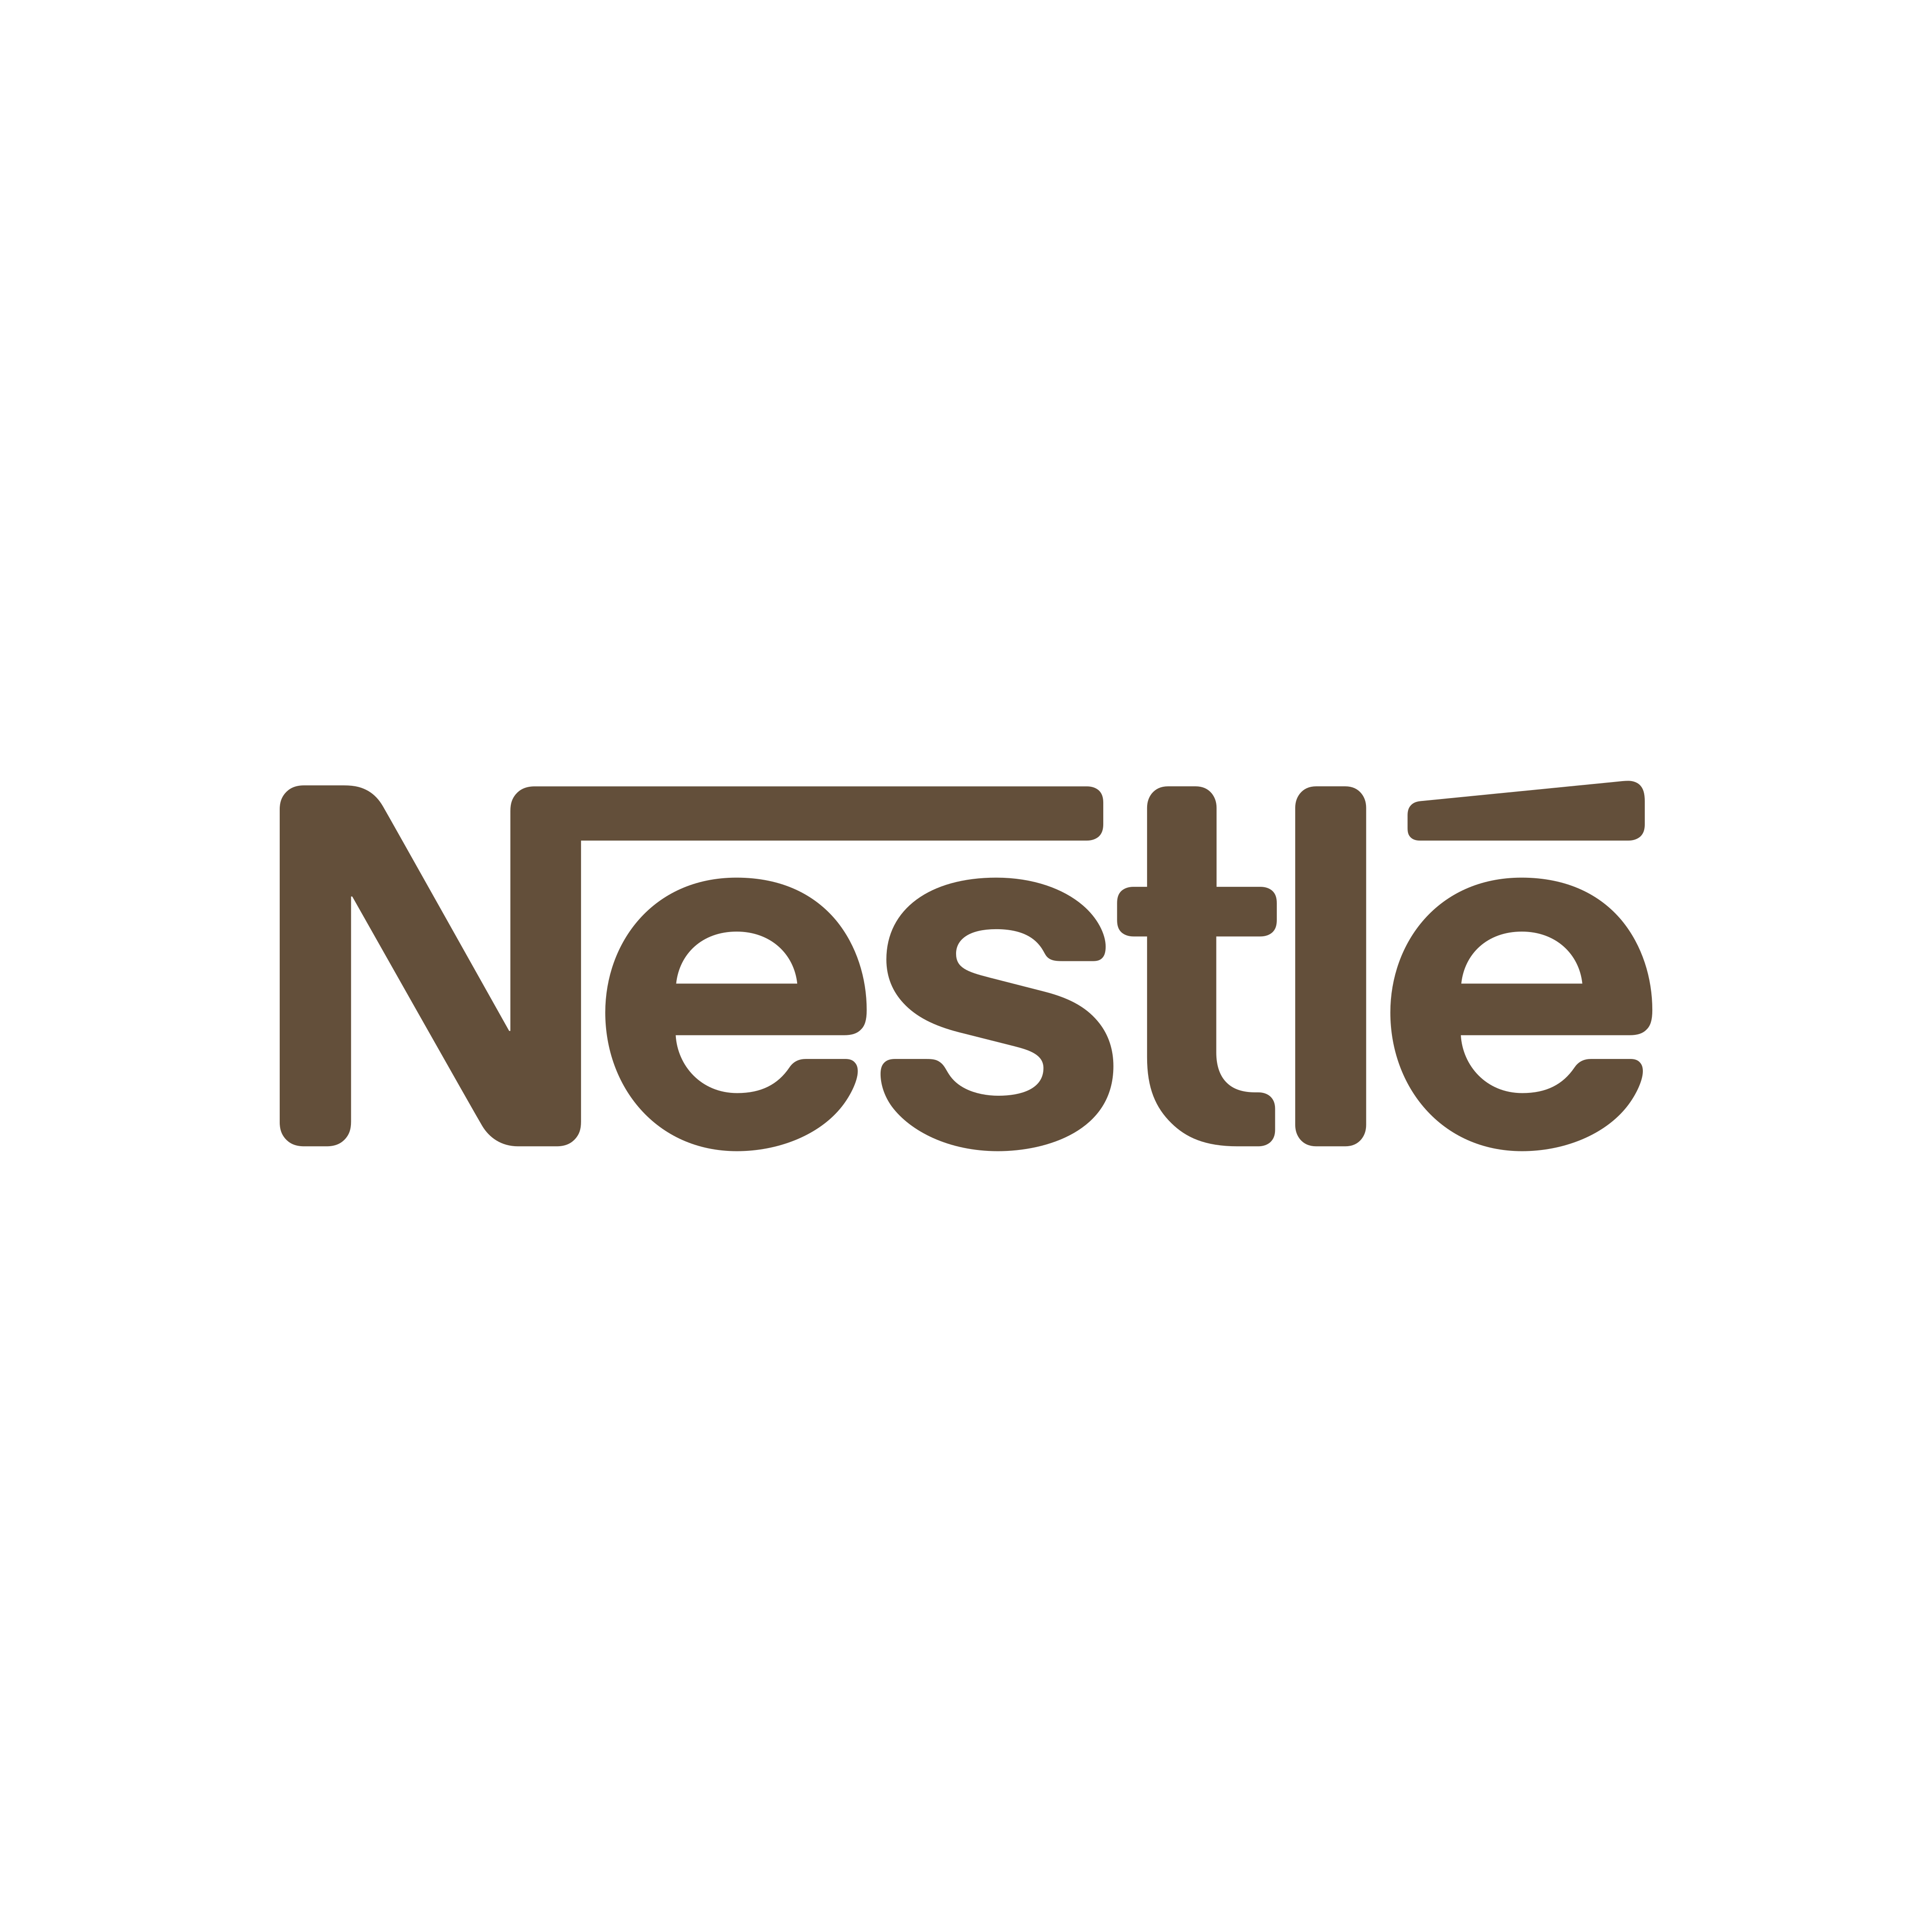 nestle logo 0 - Nestlé Logo